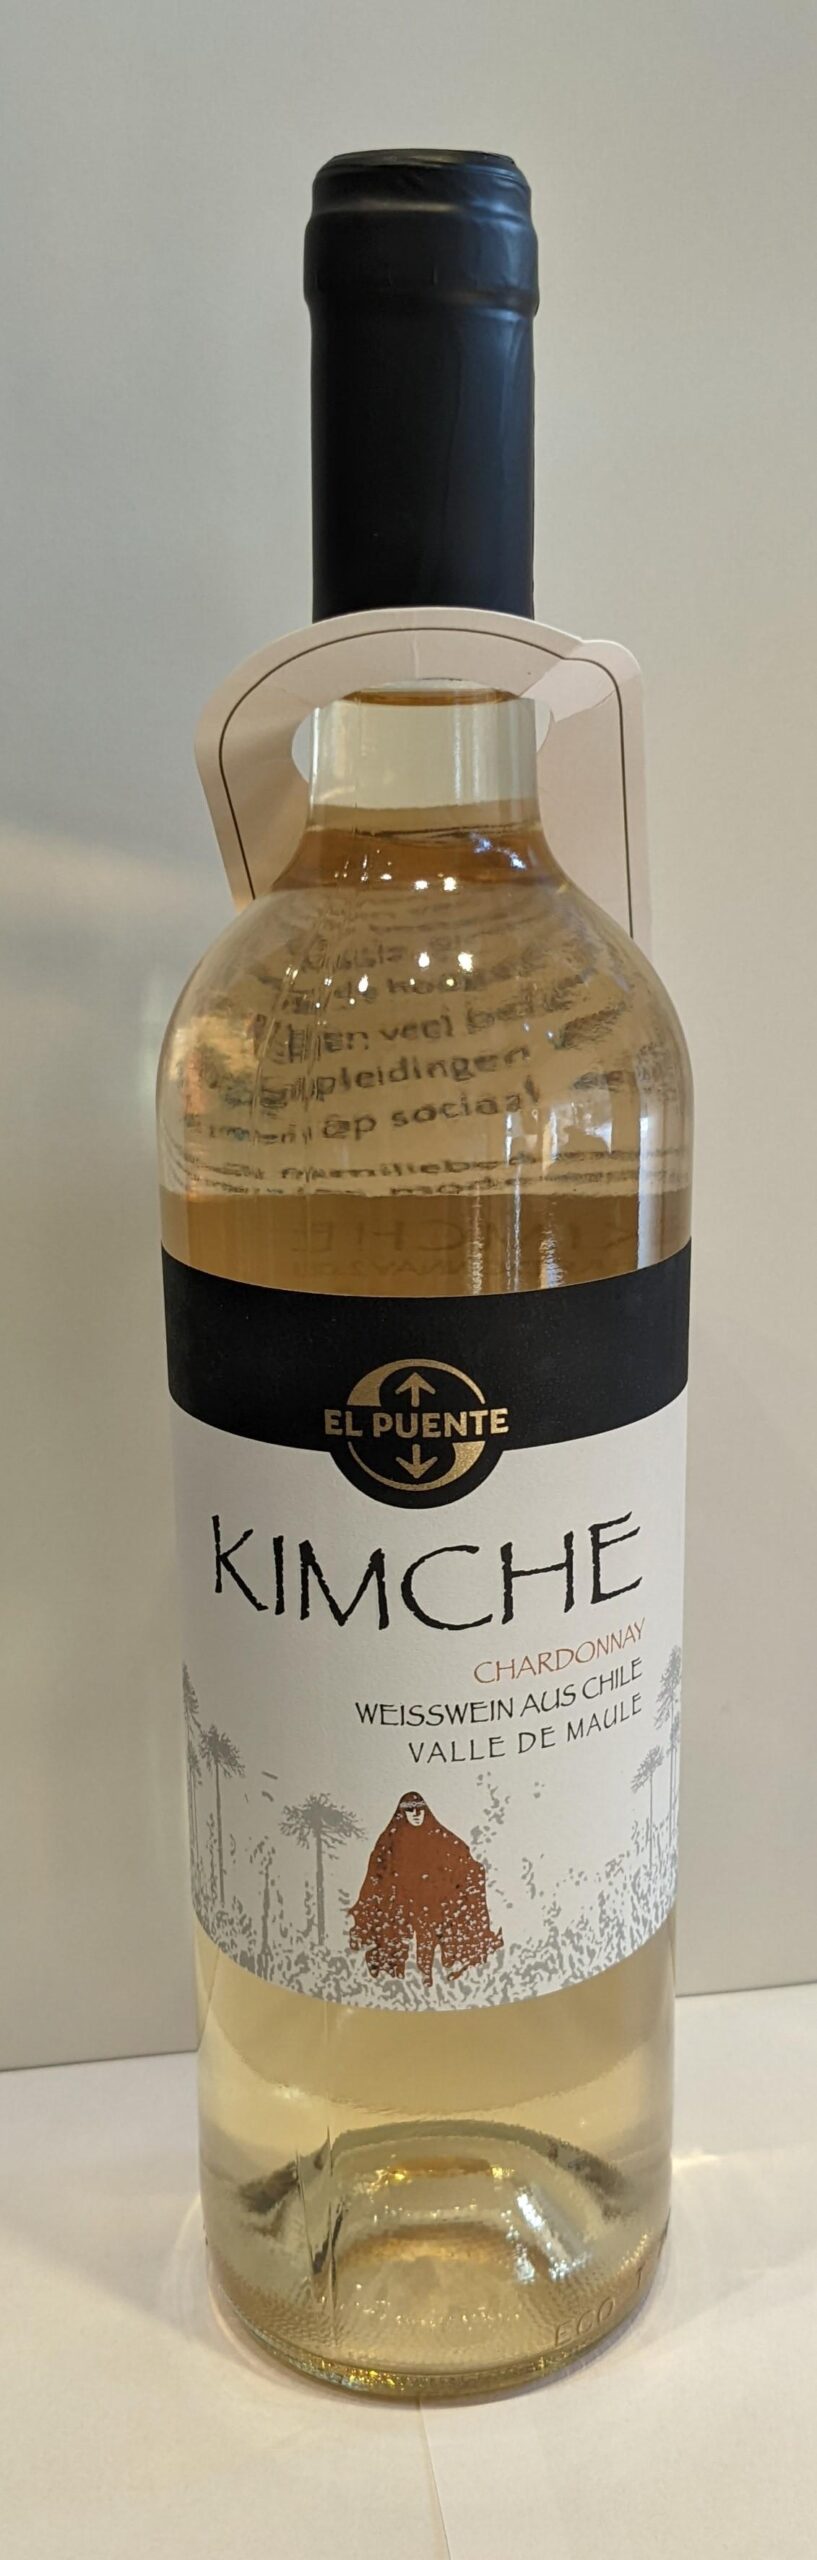 Kimche, Chardonnay